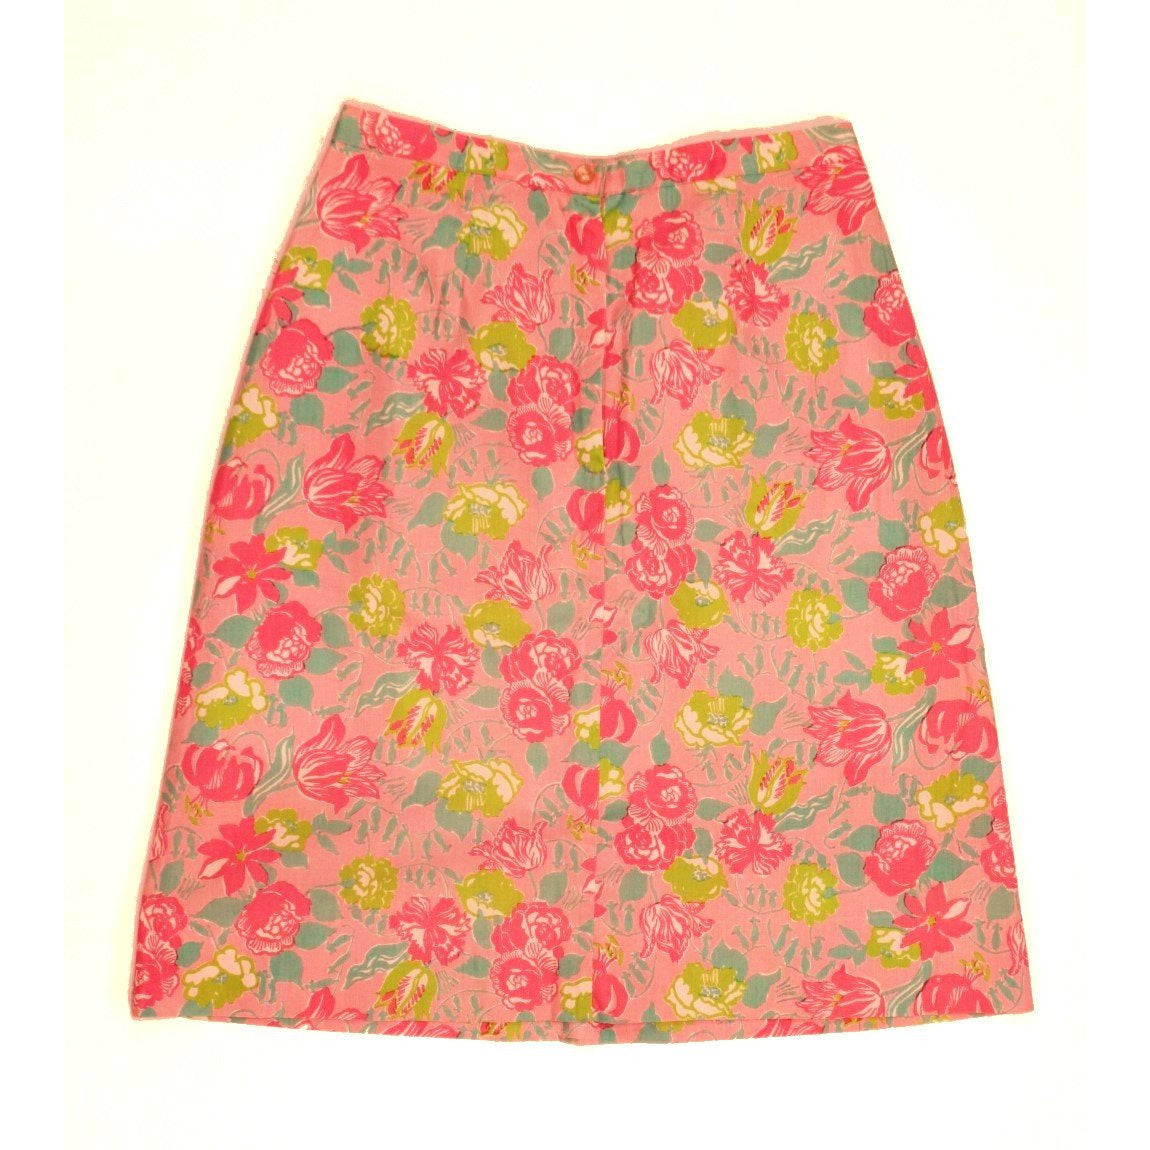 Lilly Pulitzer Floral Print Skirt Sz: 14